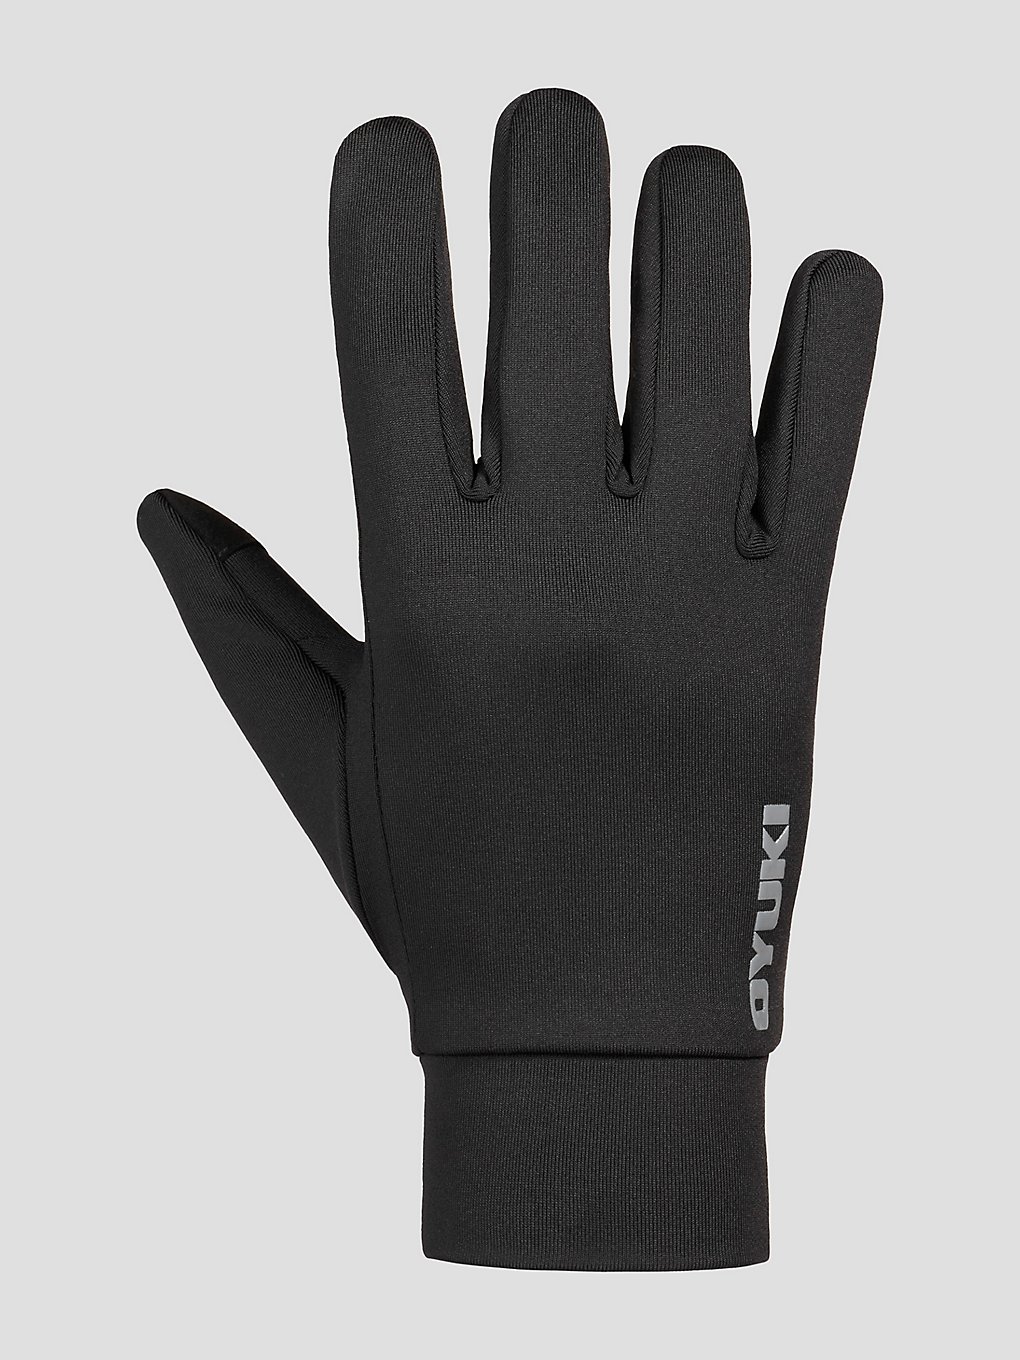 Oyuki Jr Proliner Handschuhe black kaufen